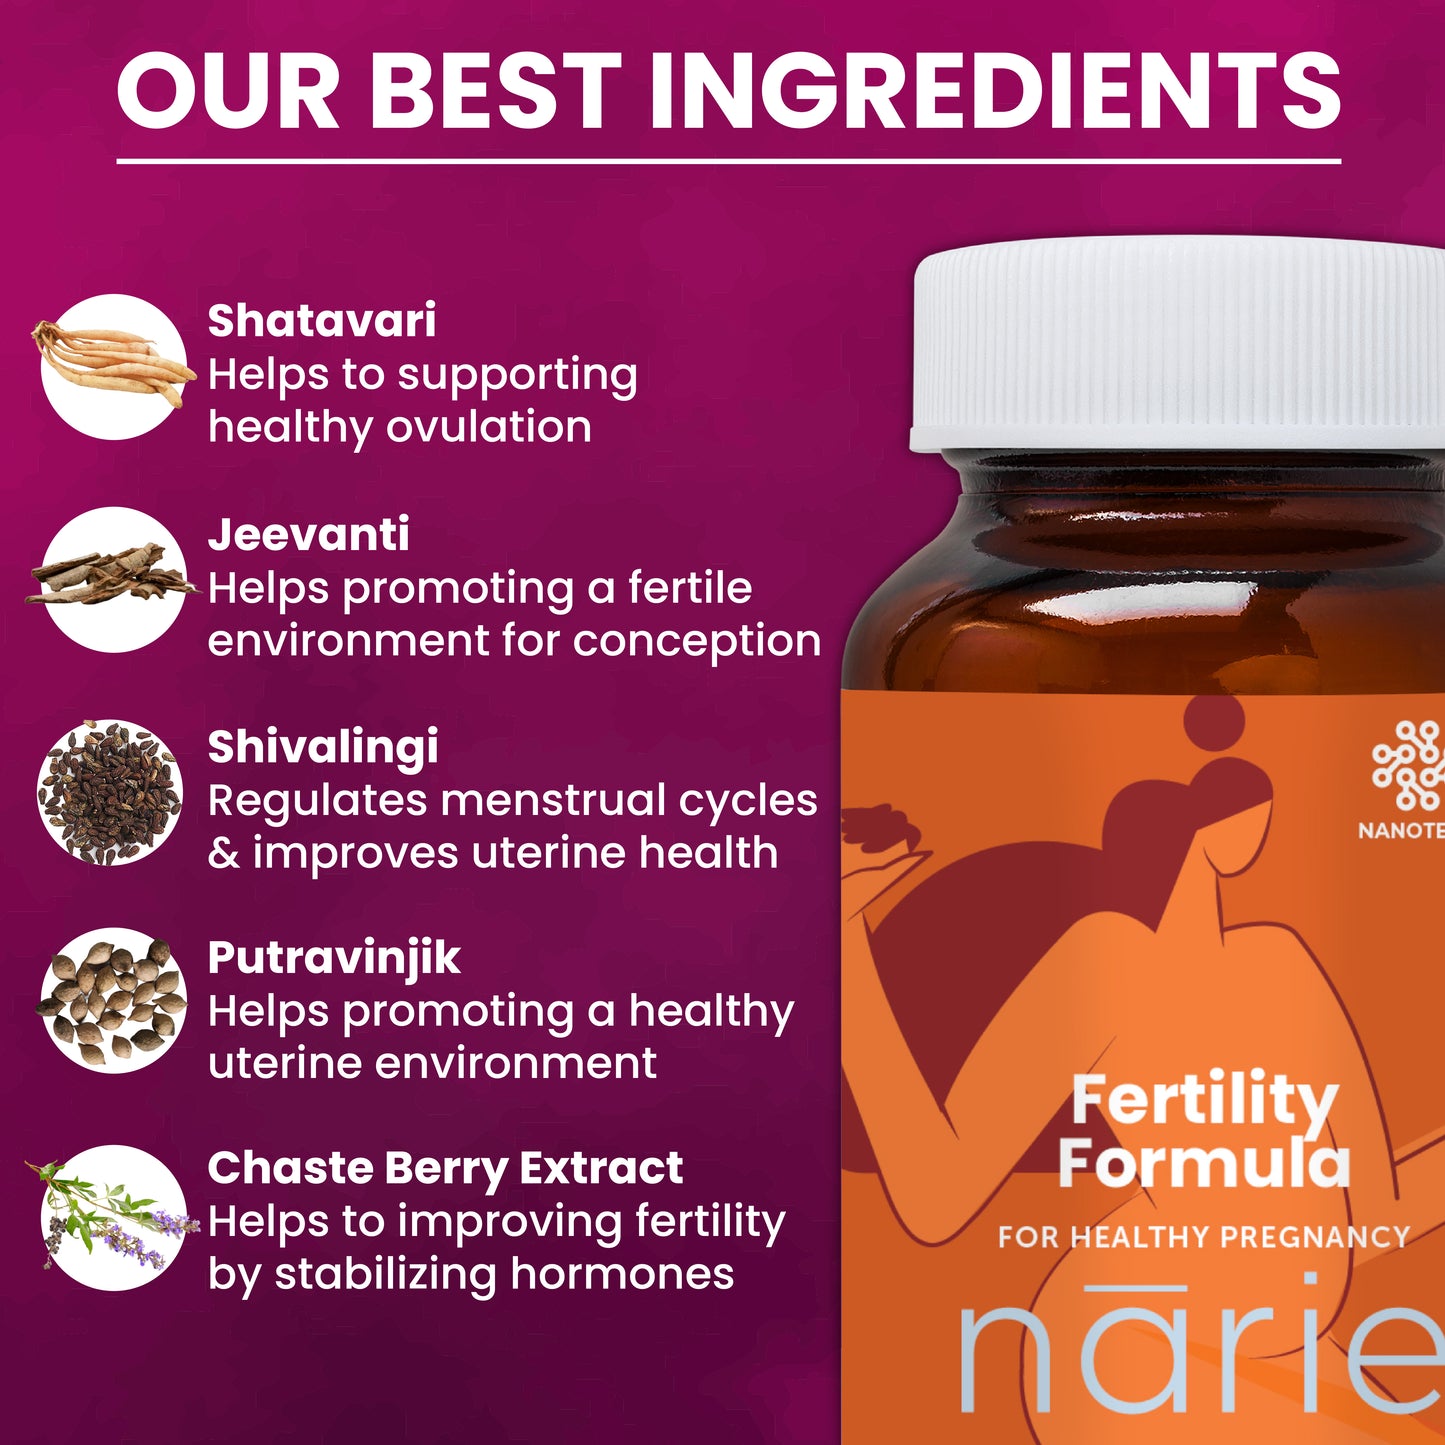 Narie Fertility Formula Tablets